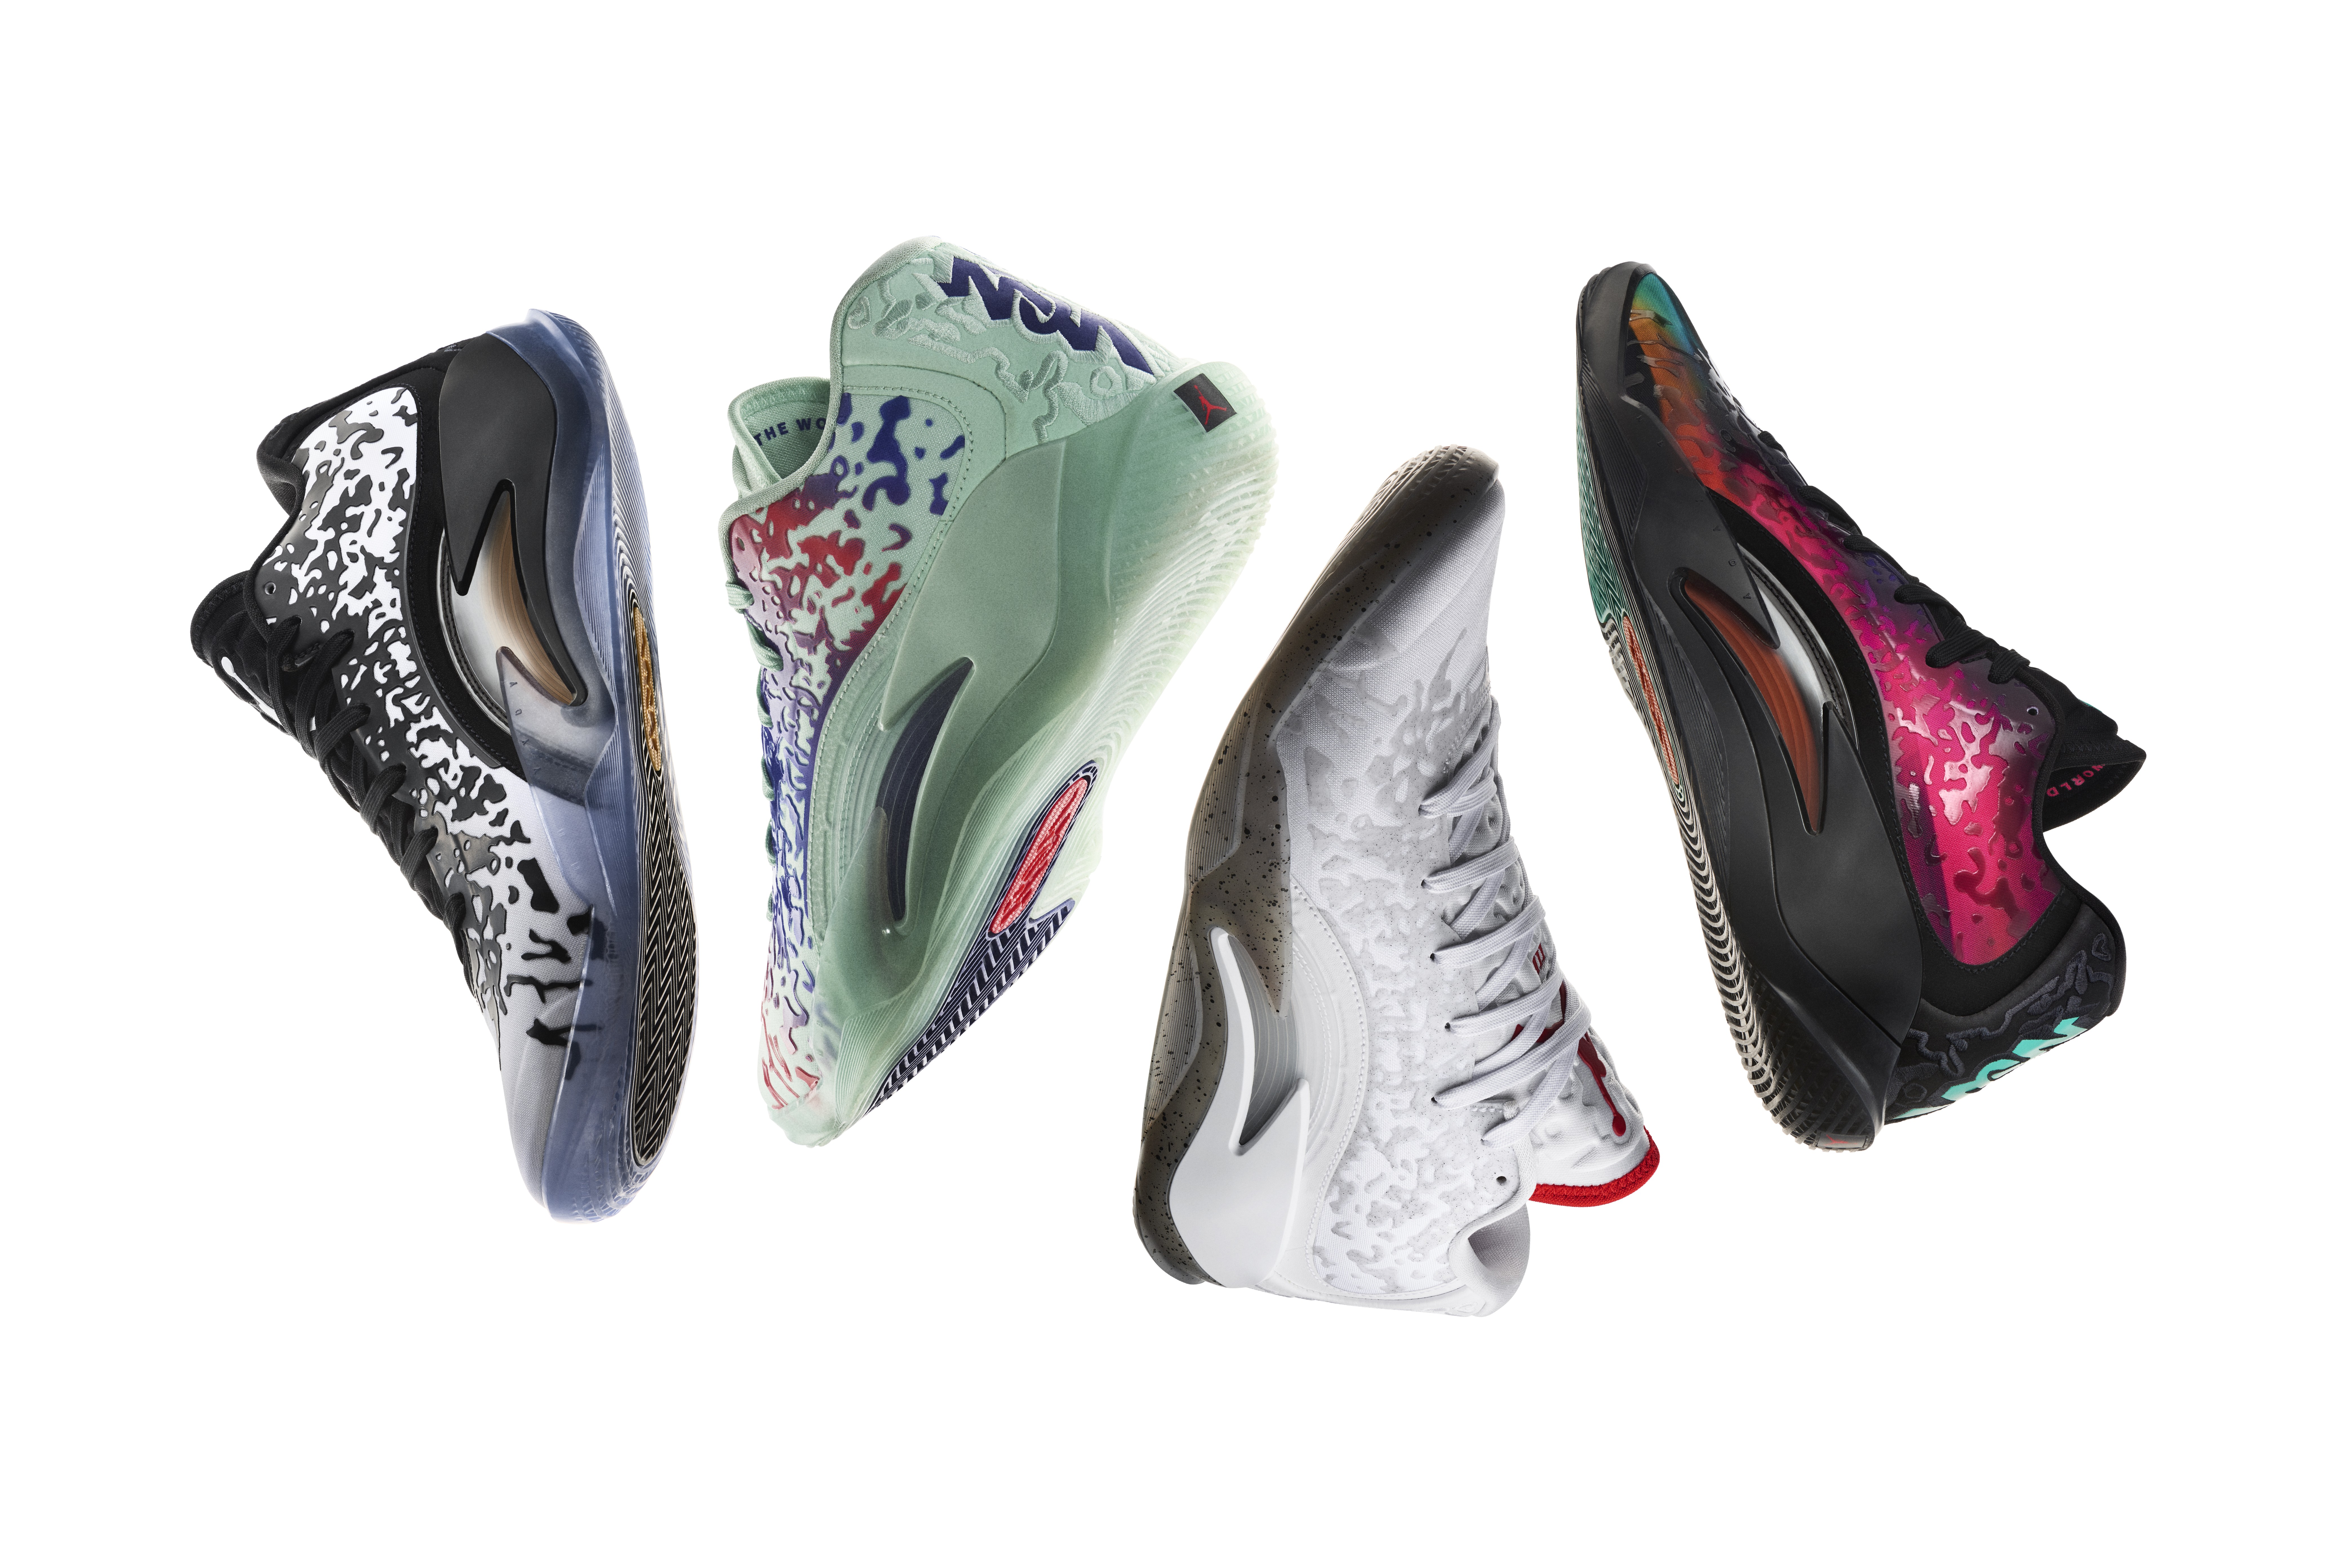 Jordan Brand unveils Luka Doncic's first signature basketball shoe